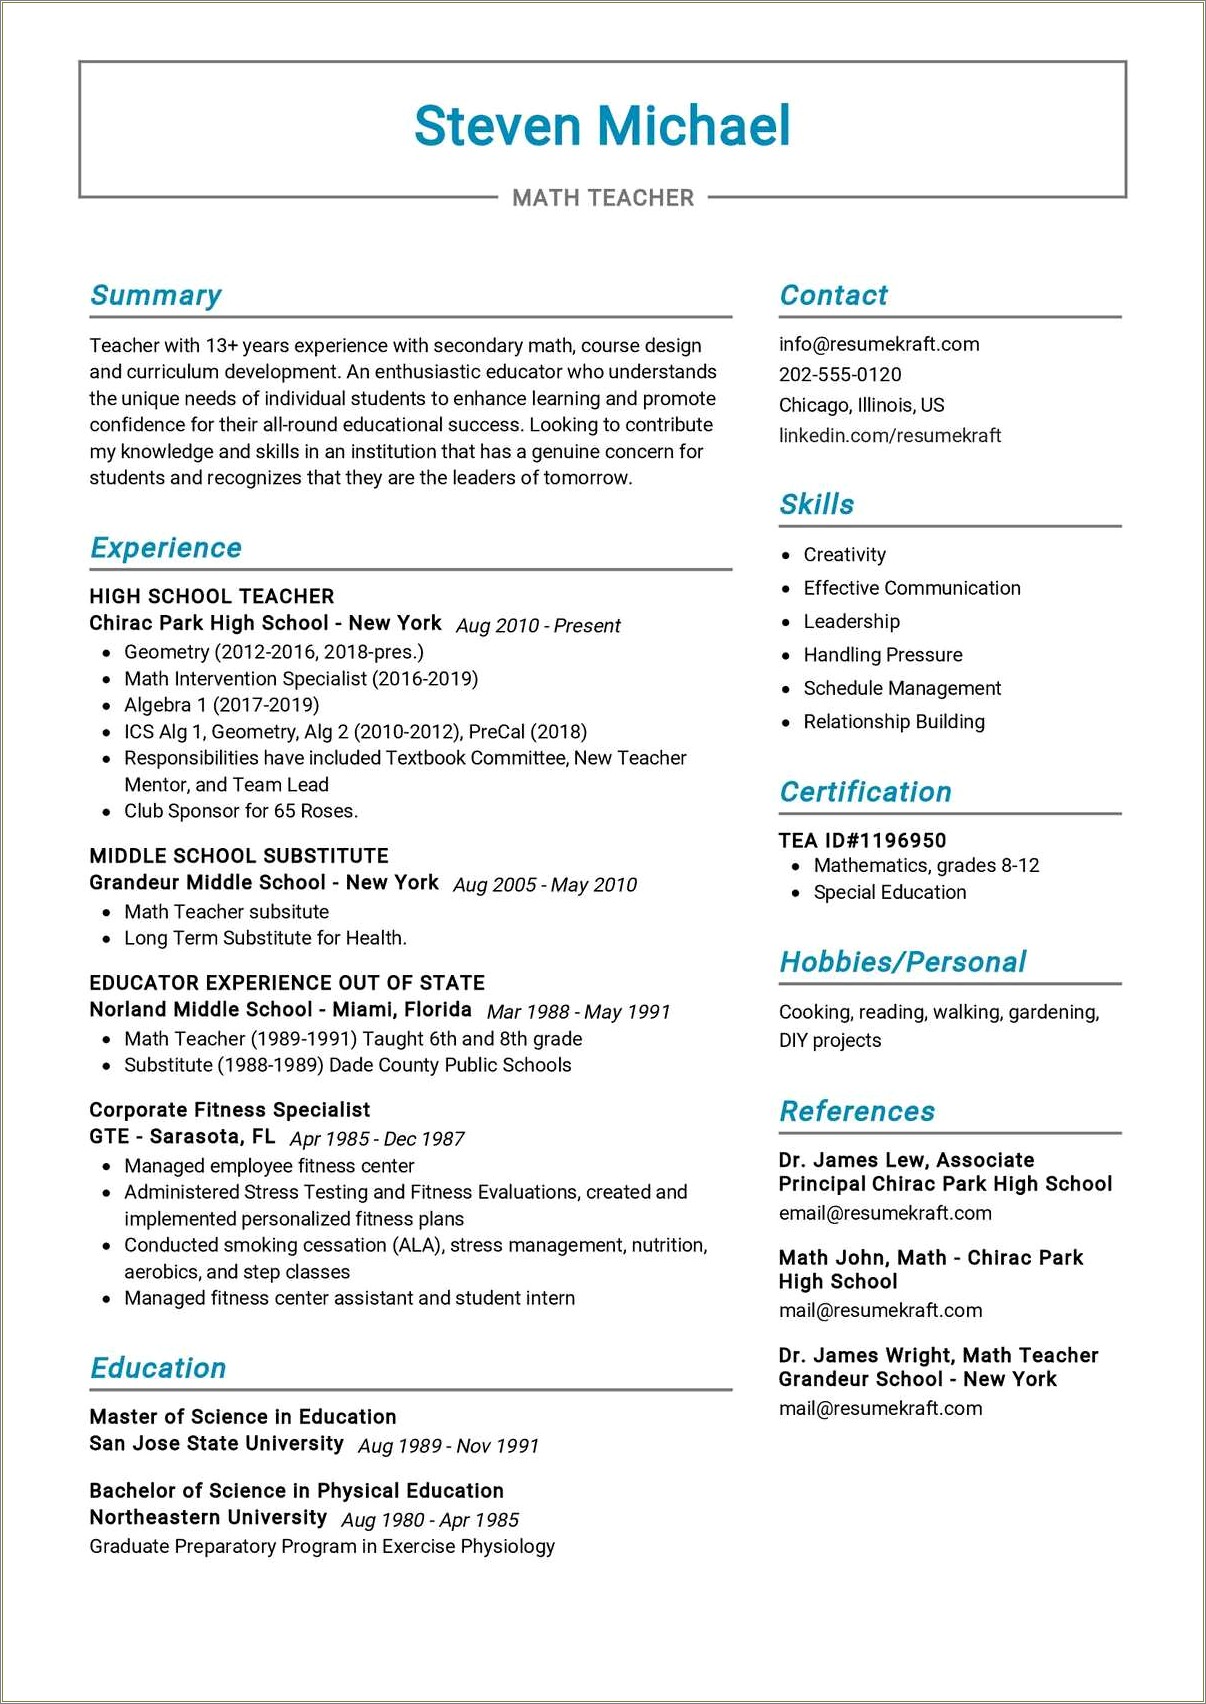 Best Resume Format For Maths Teacher